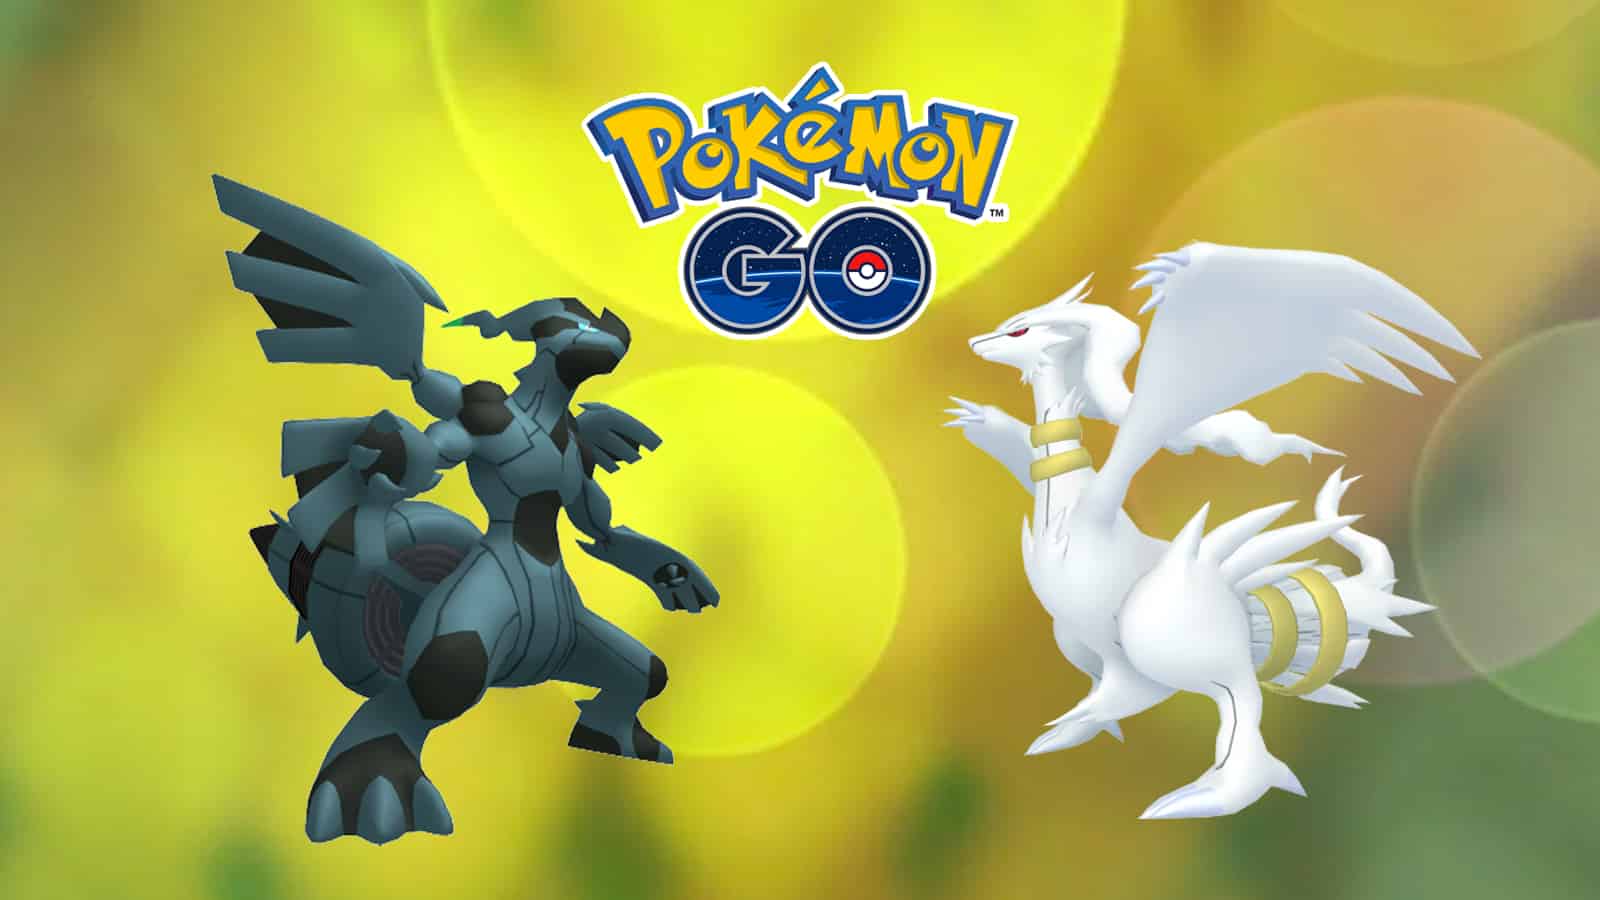 Pokémon, Pokemon: Black and White, Reshiram (Pokémon), Zekrom